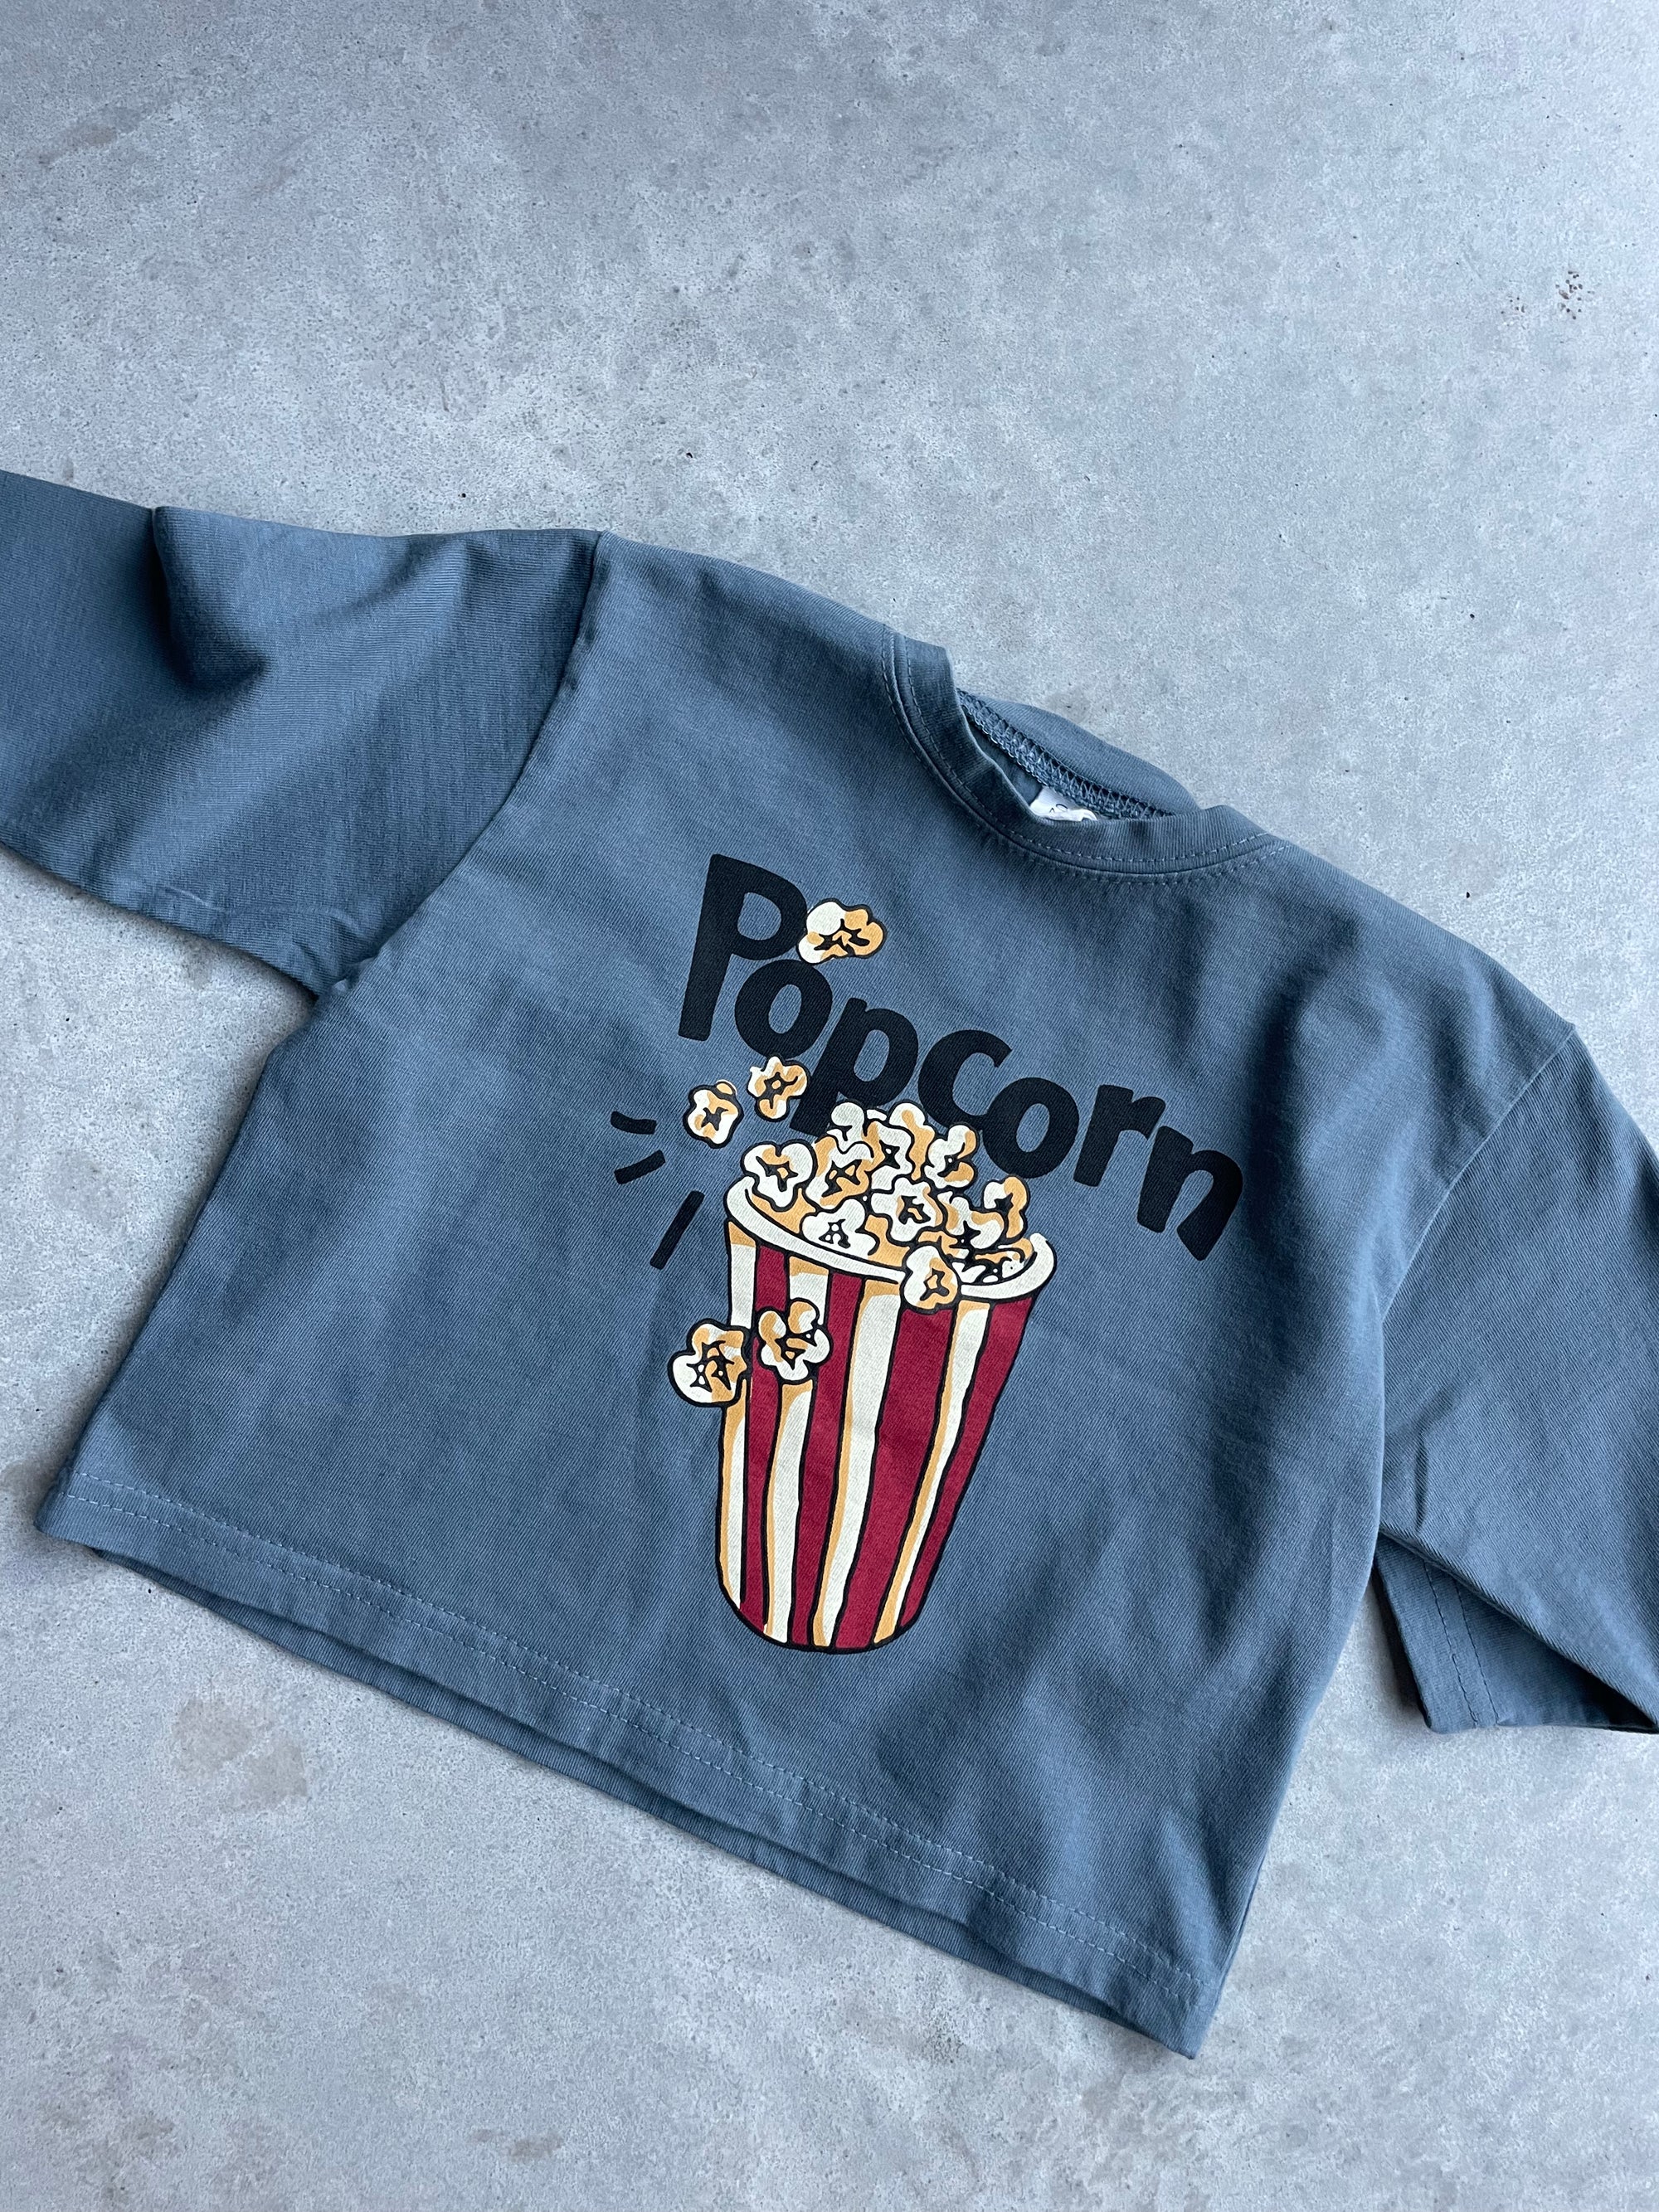 Popcorn tee